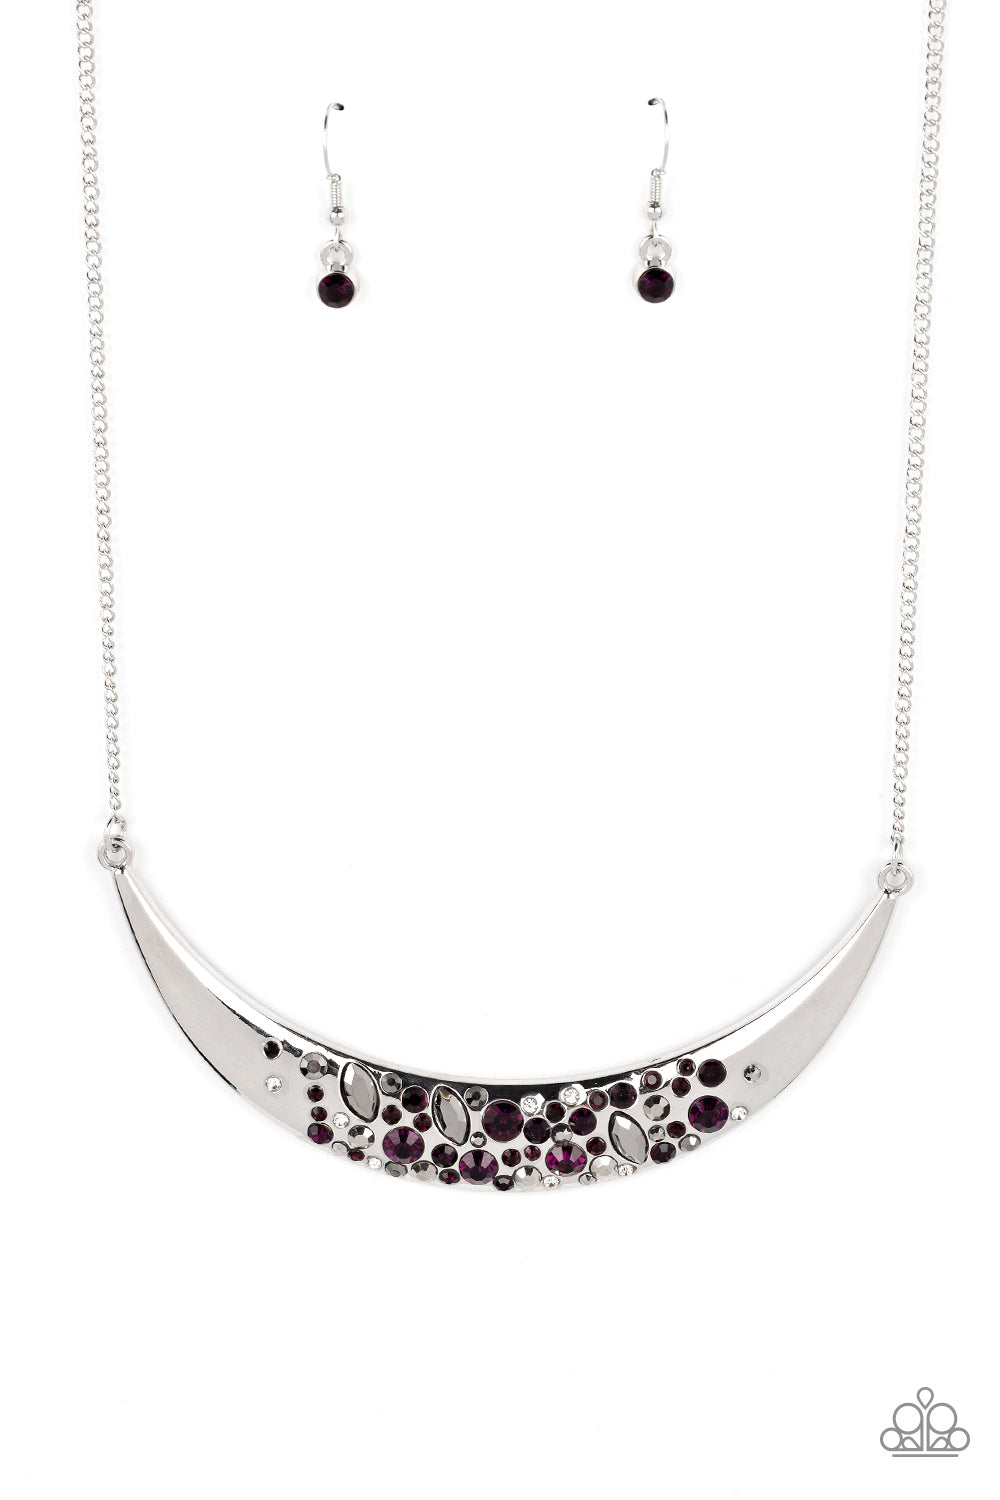 Bejeweled Baroness - purple - Paparazzi necklace